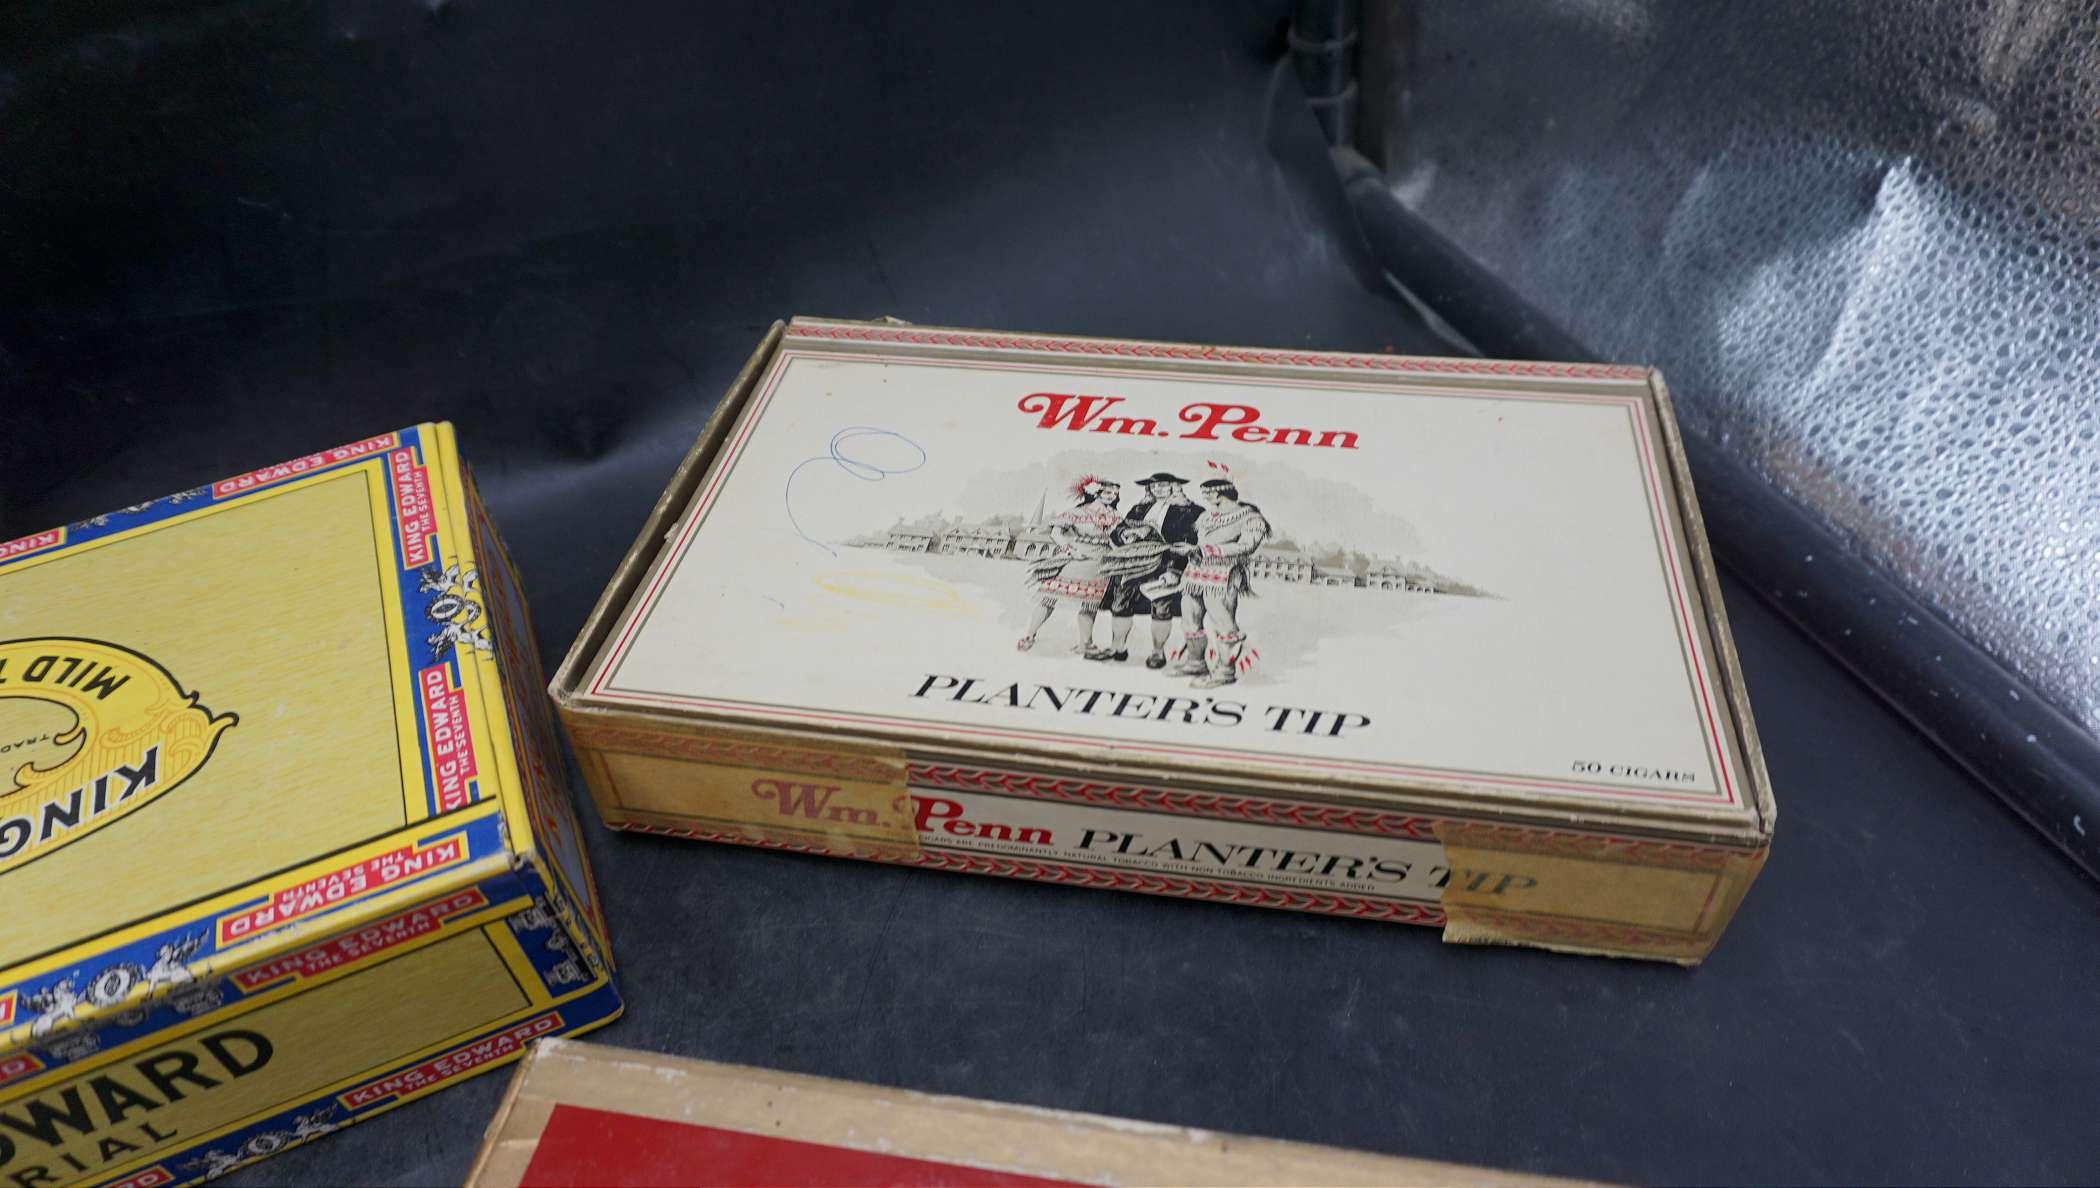 4 Cigar Boxes - Wm Penn, King Edward, Roi-Tan